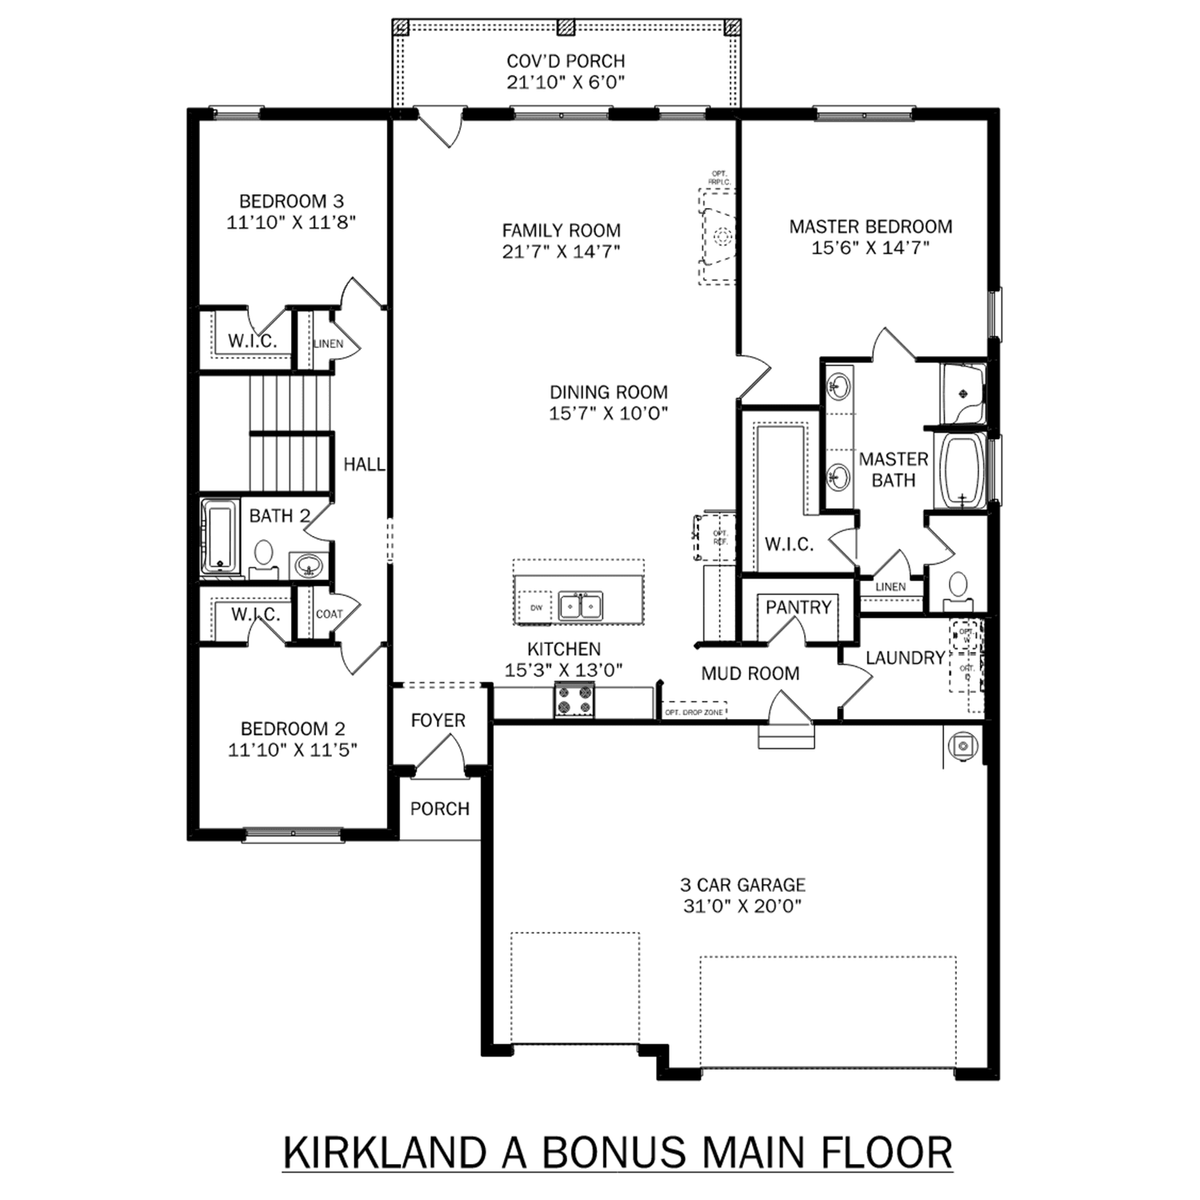 1 - The Kirkland with Bonus buildable floor plan layout in Davidson Homes' North Ridge community.